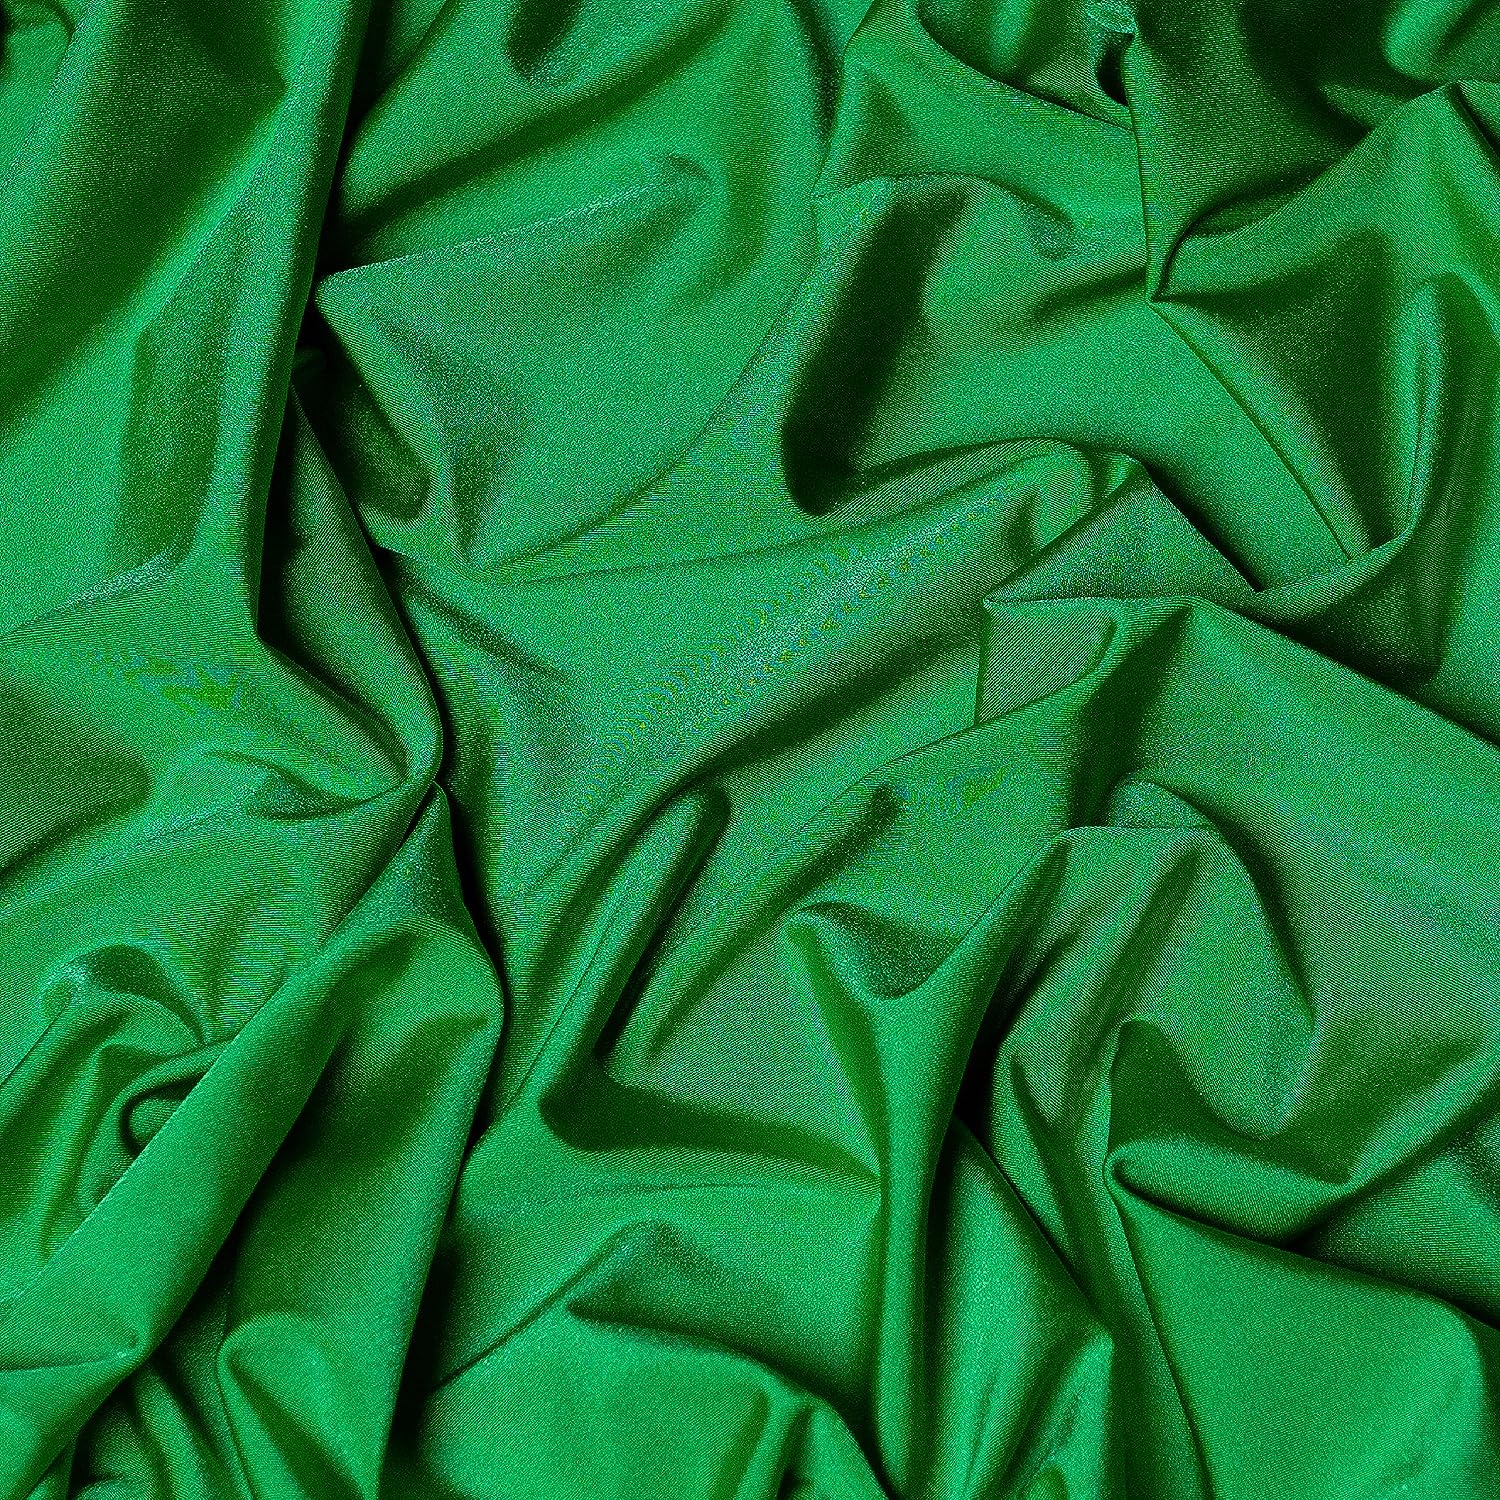 Kelly Green Luxury Nylon Spandex Fabric By The YardICE FABRICSICE FABRICSBy The Yard (60" Width)Kelly Green Luxury Nylon Spandex Fabric By The Yard ICE FABRICS